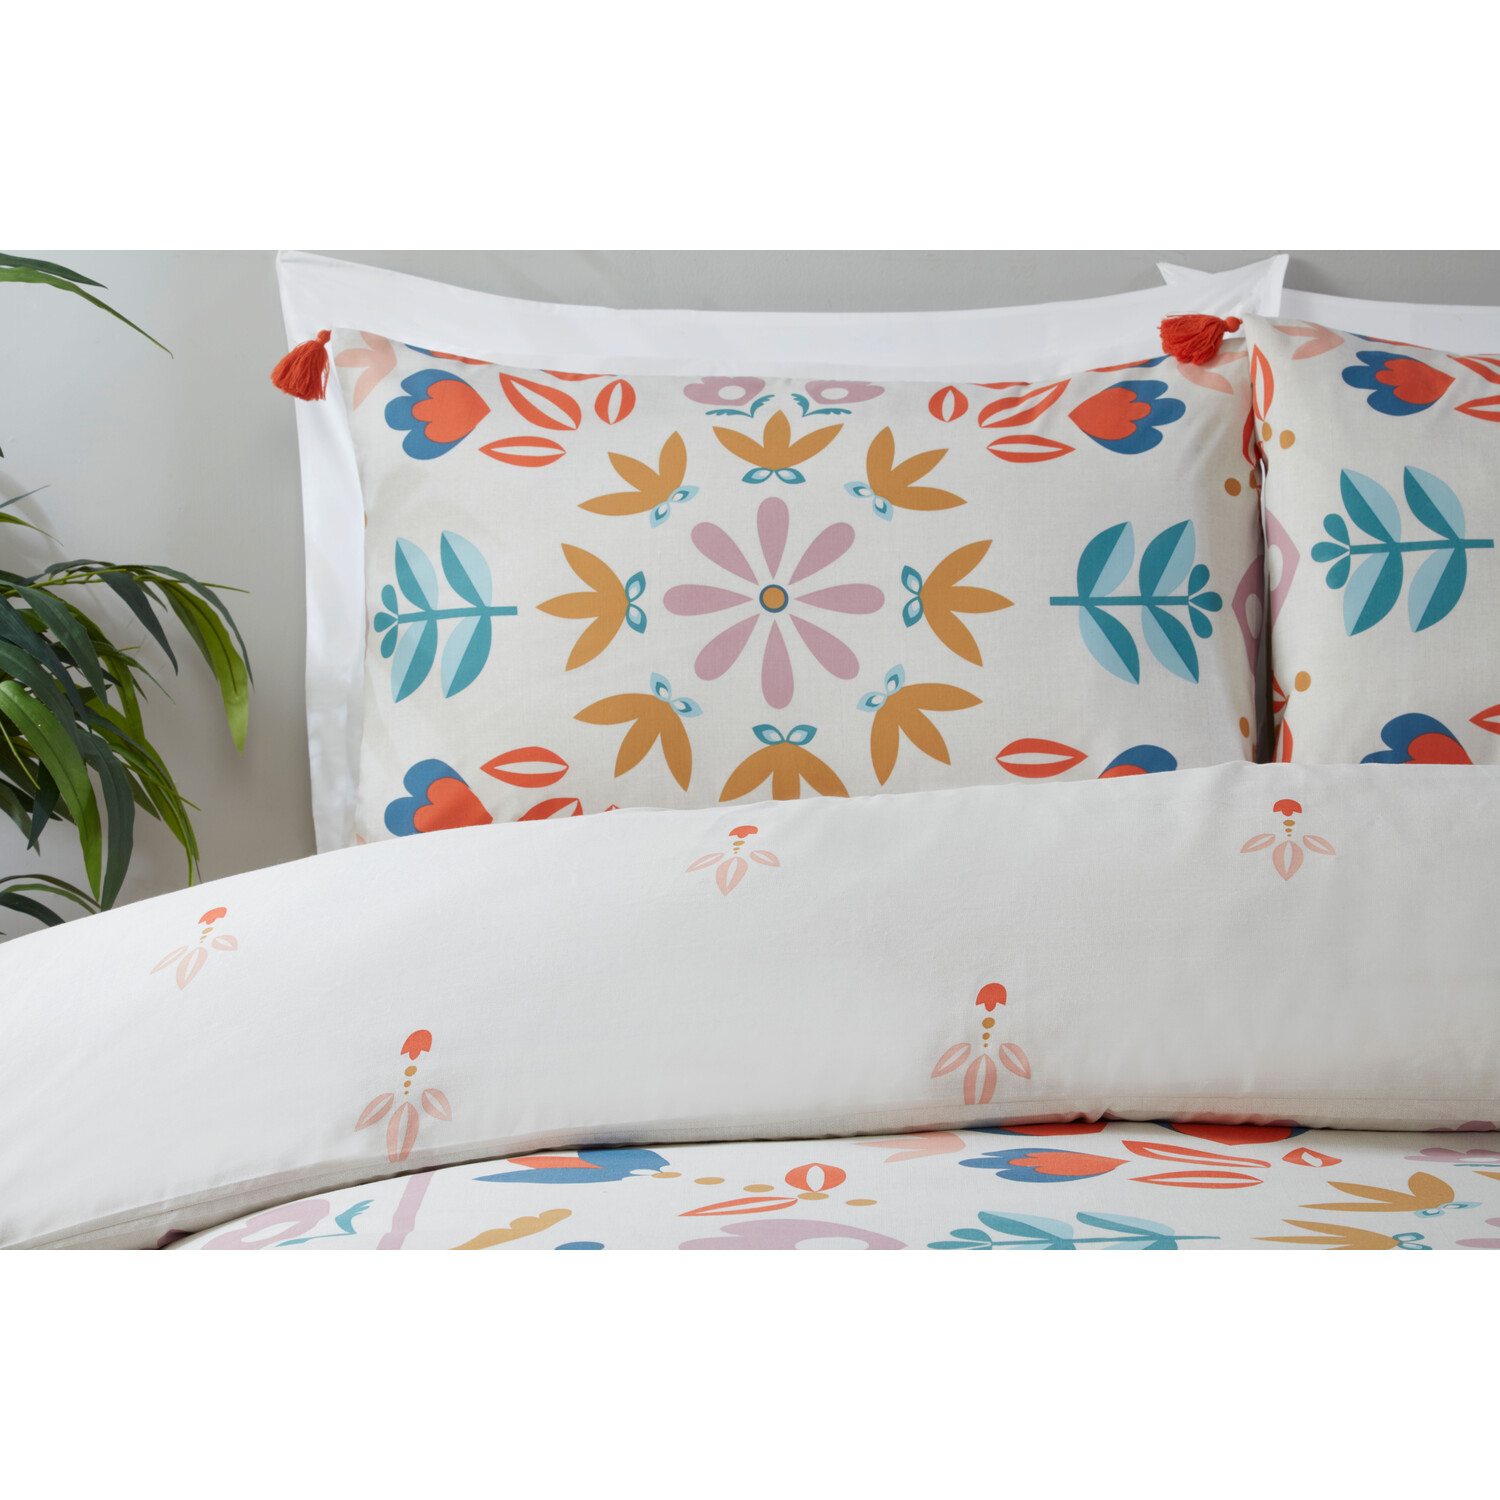 Amari Floral Duvet Cover and Pillowcase Set - King Image 3